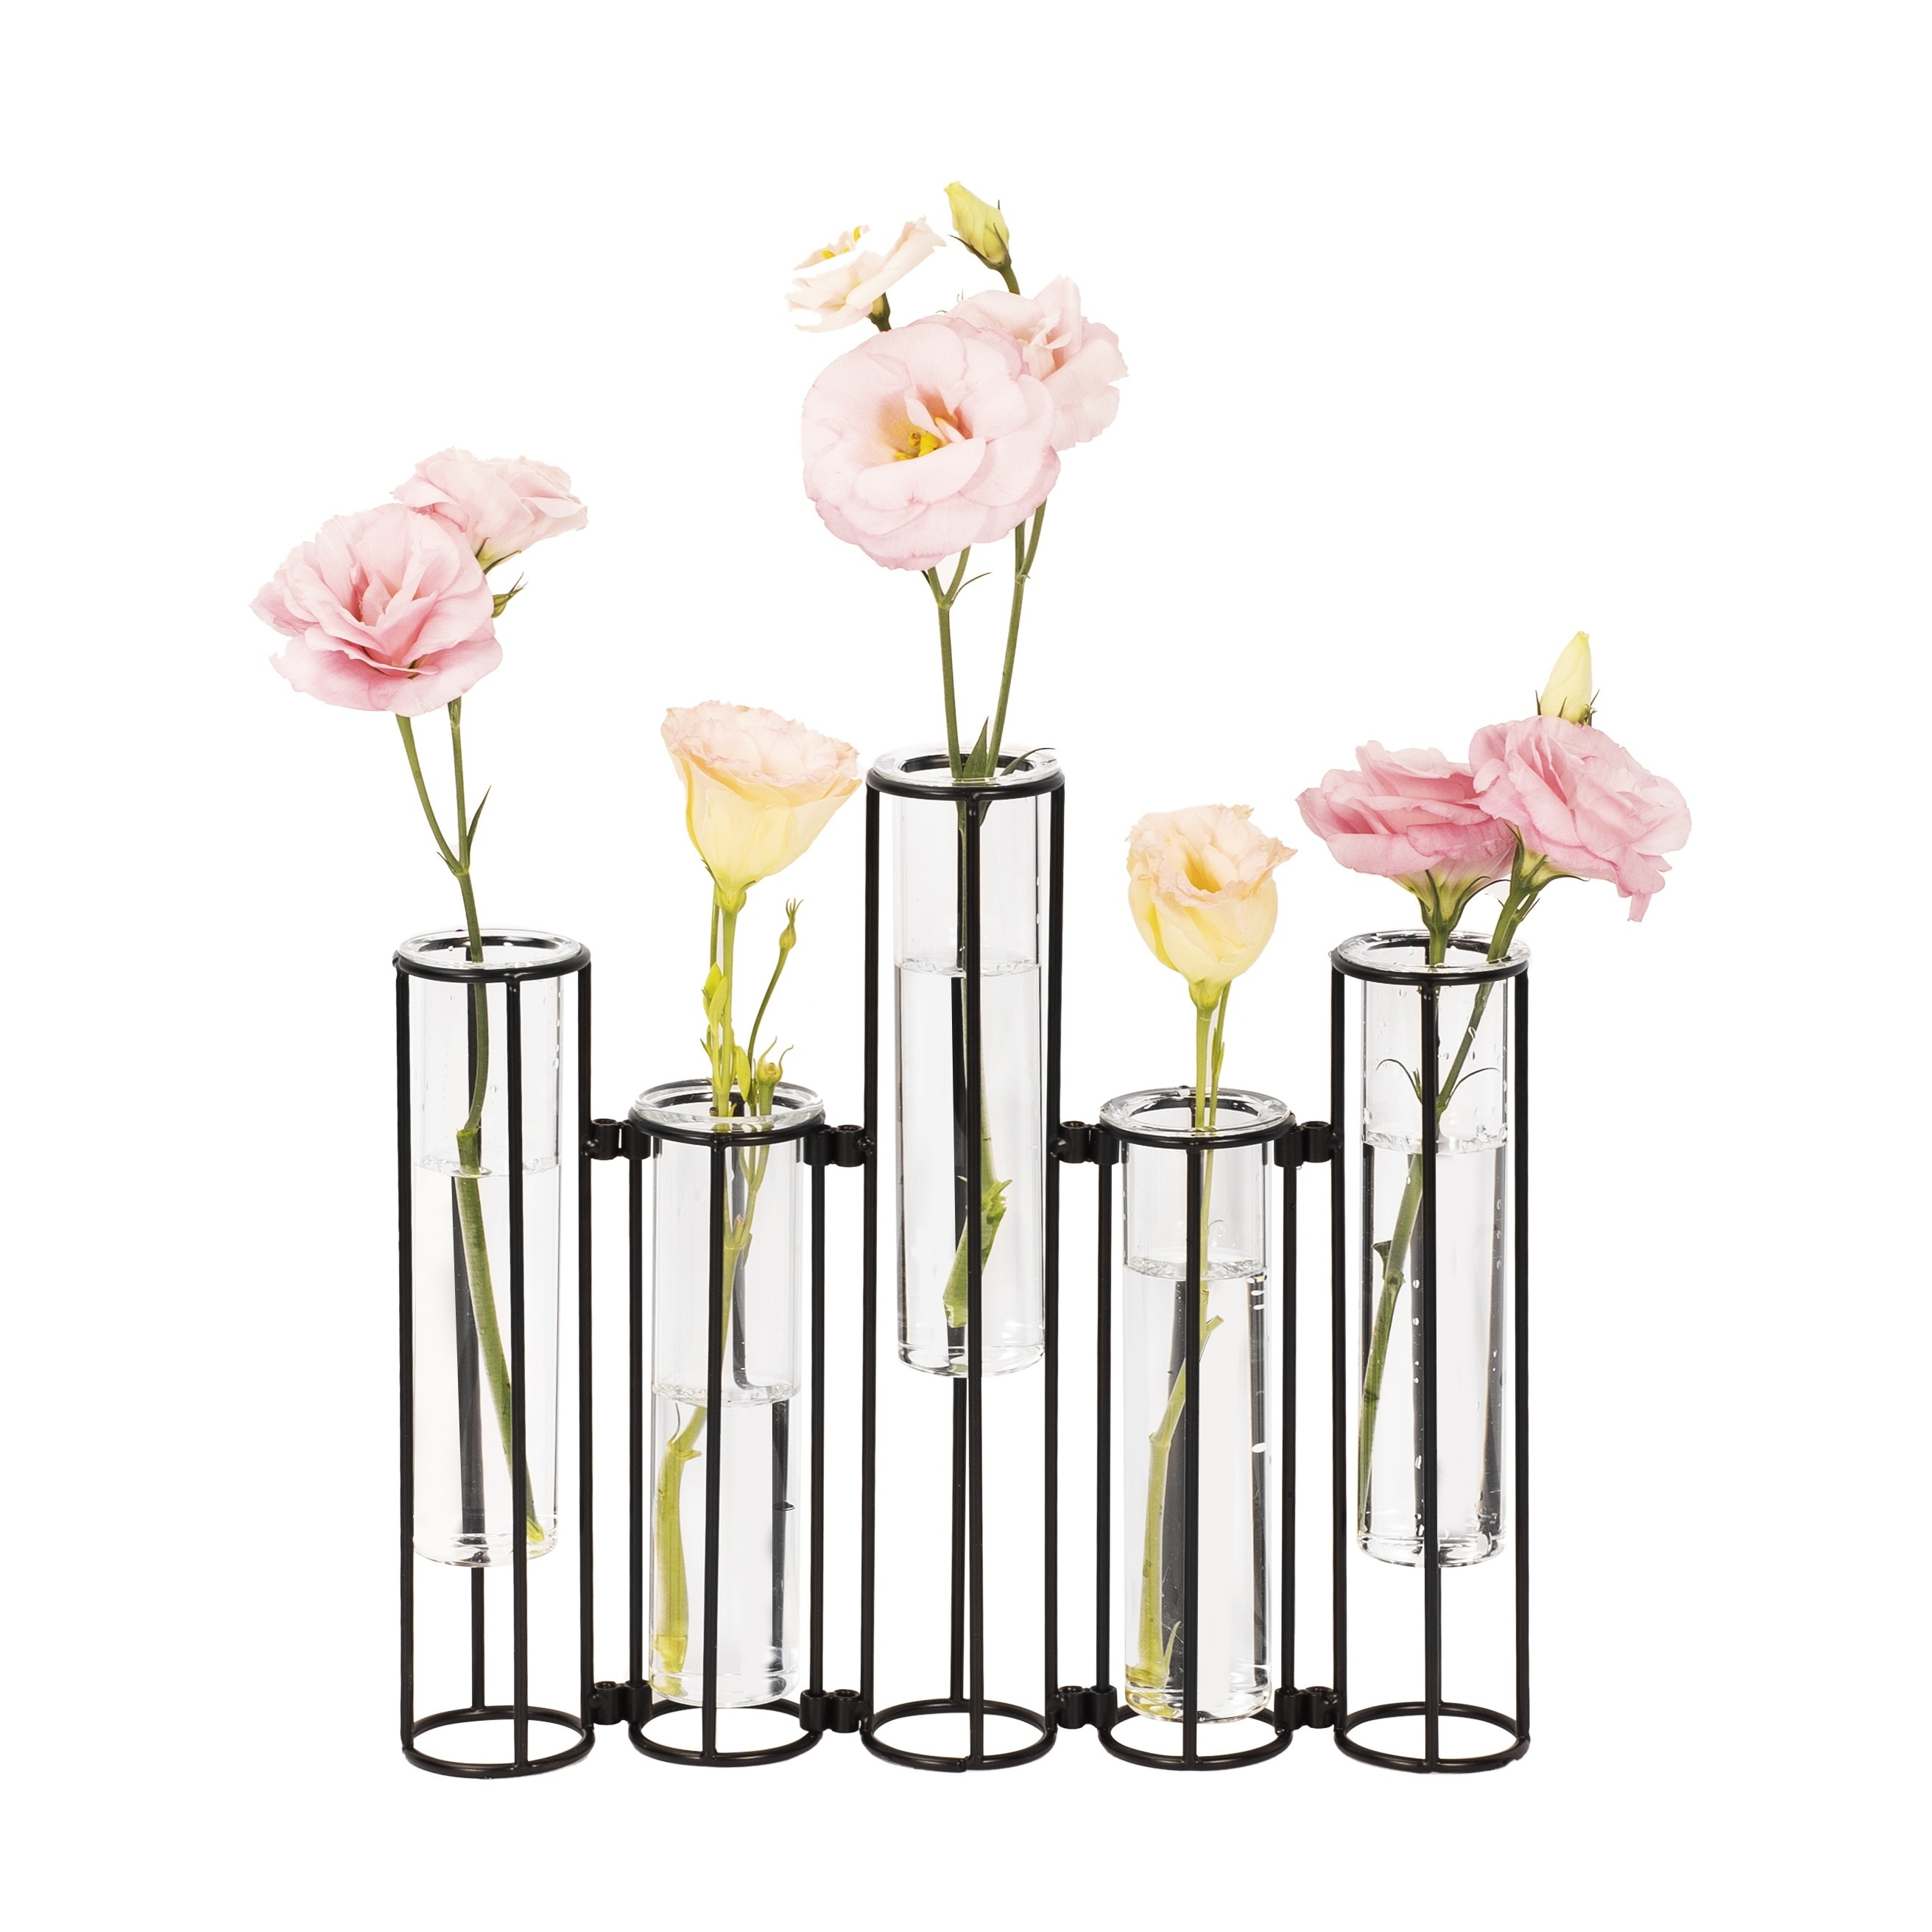 Hinged Flower Vase Test Tube, 8pcs Test Tubes Flower Vases Plant Display  Holder, Table Centerpieces Vase With Brush